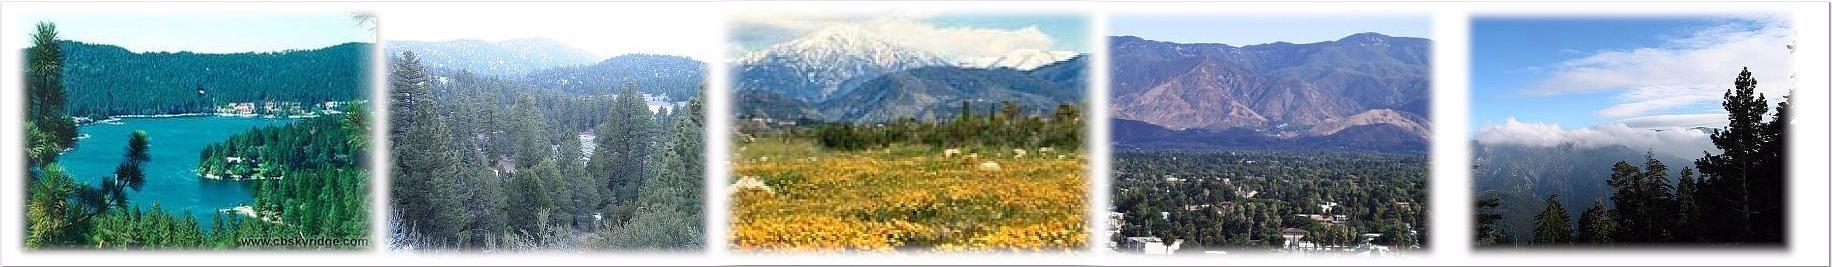 Views of the San Bernardino National Forest